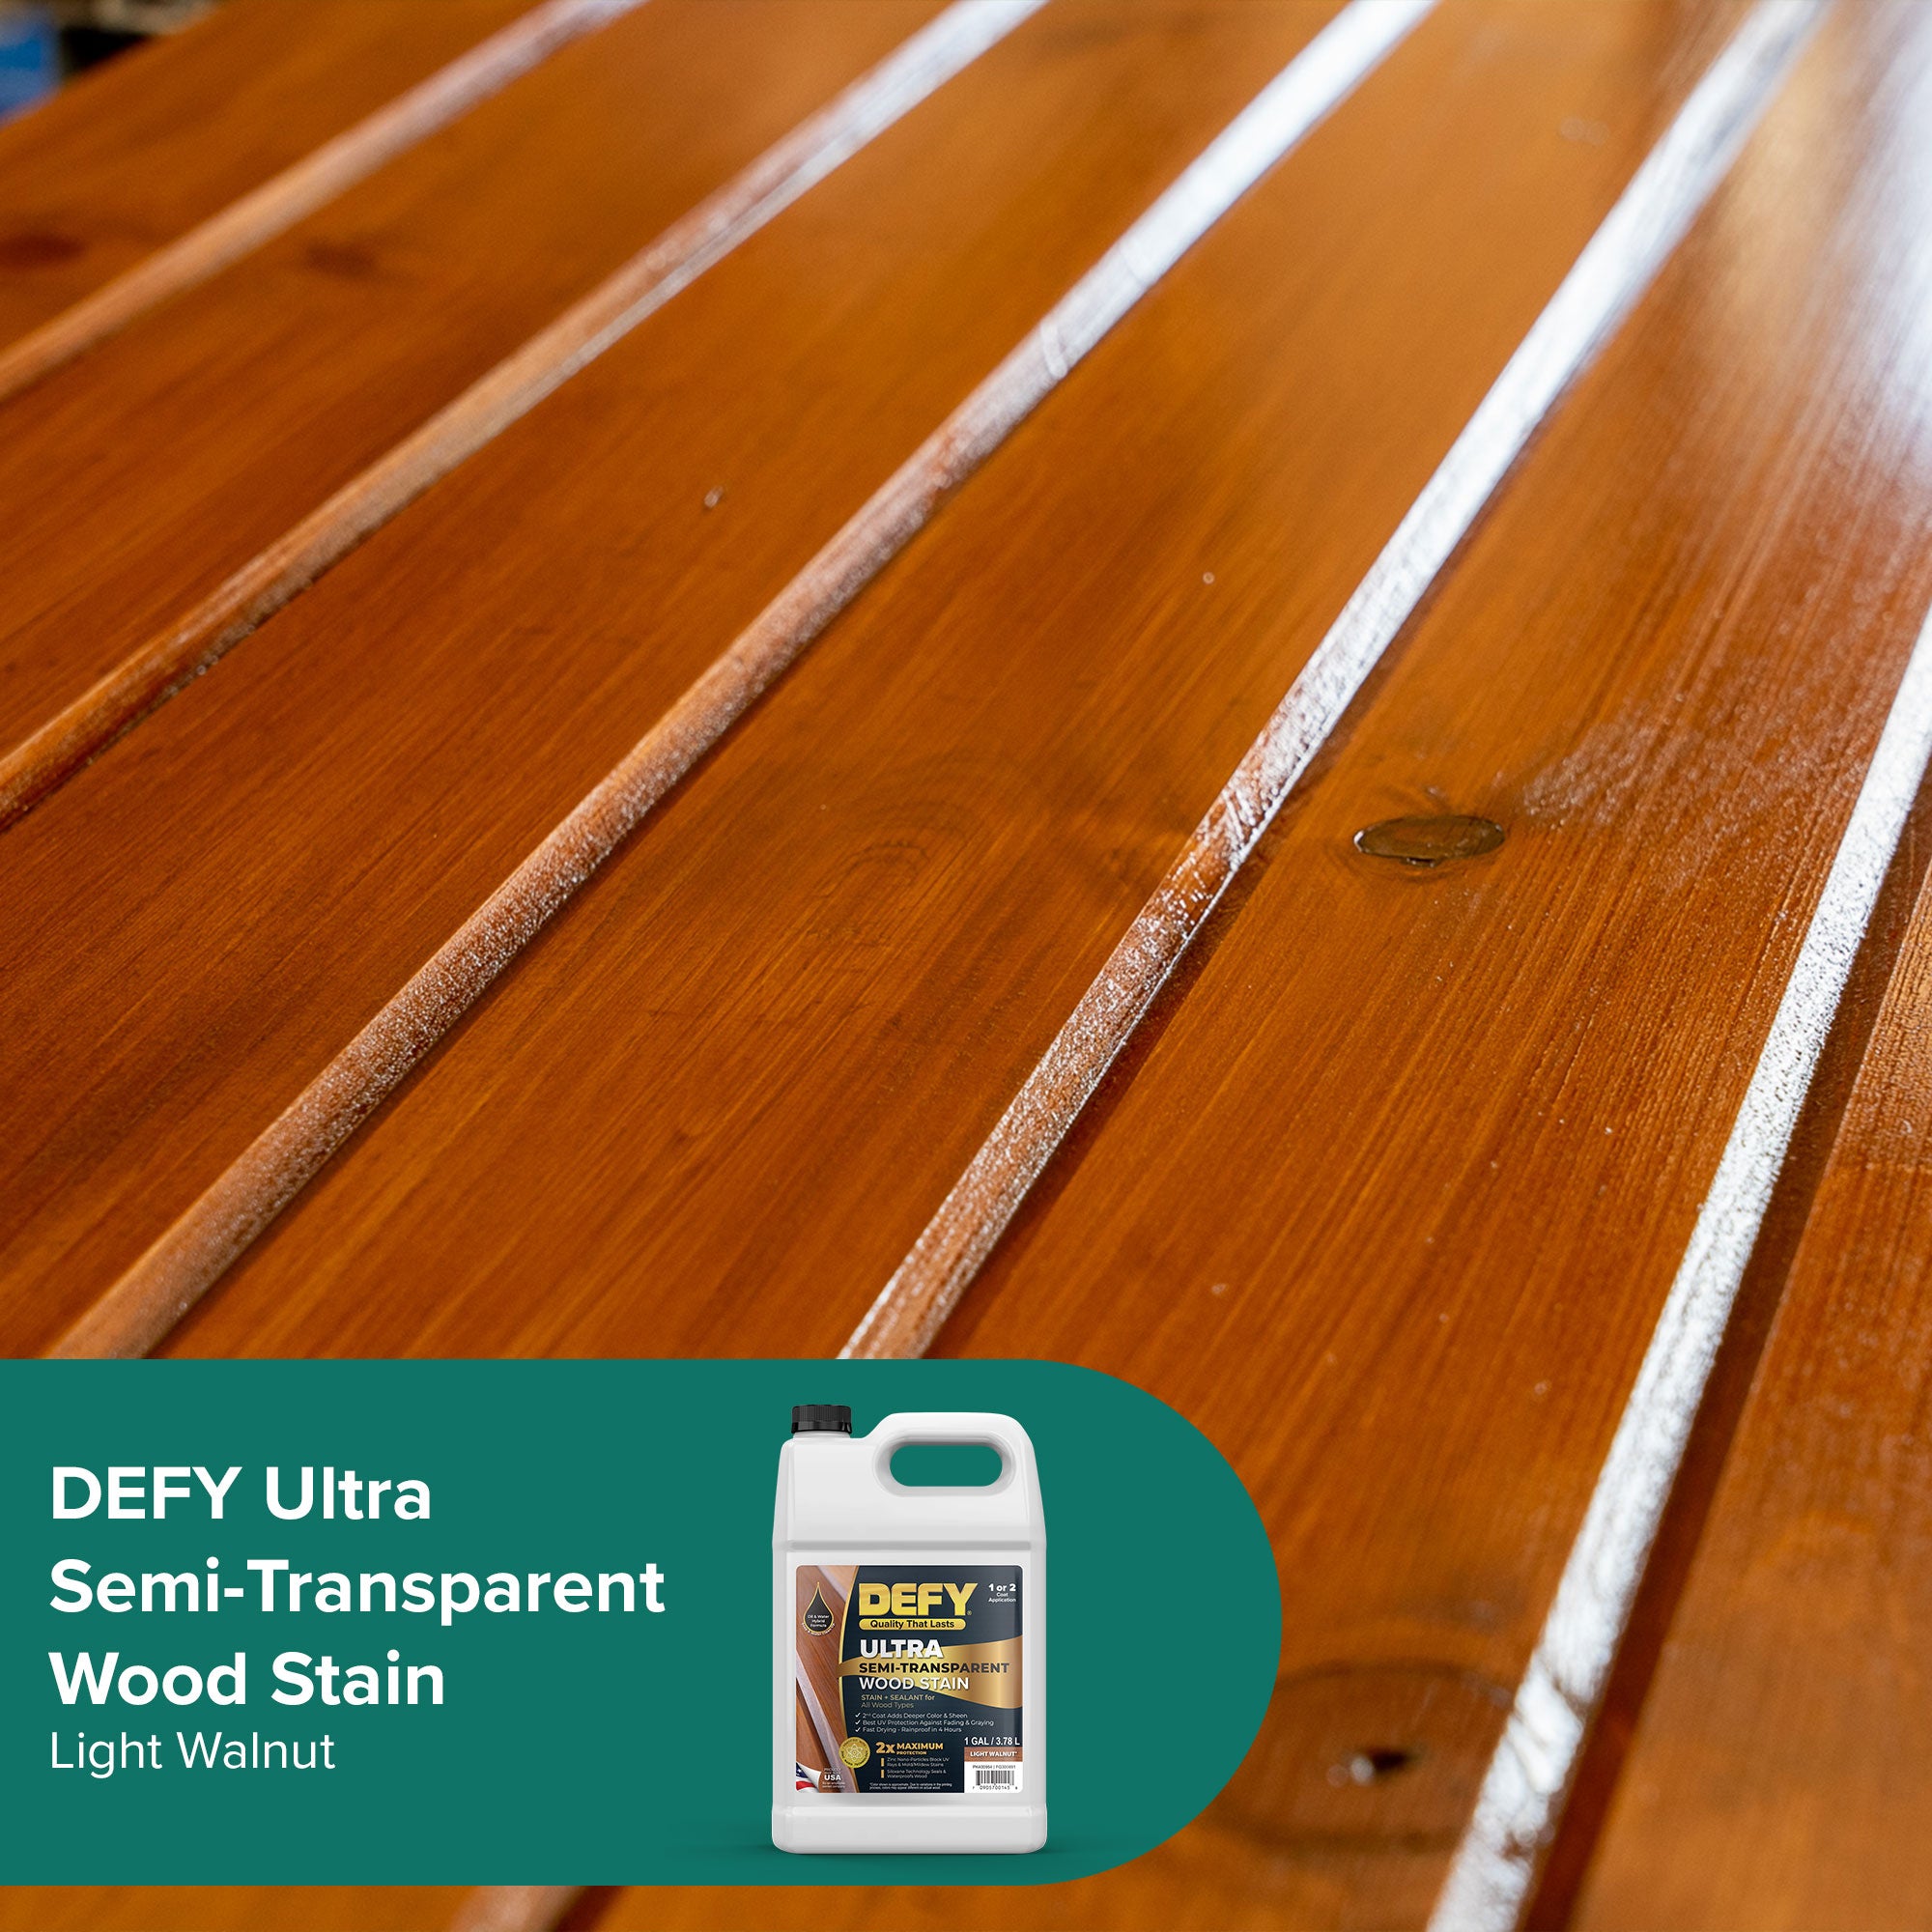 DEFY Ultra Semi-Transparent Wood Stain